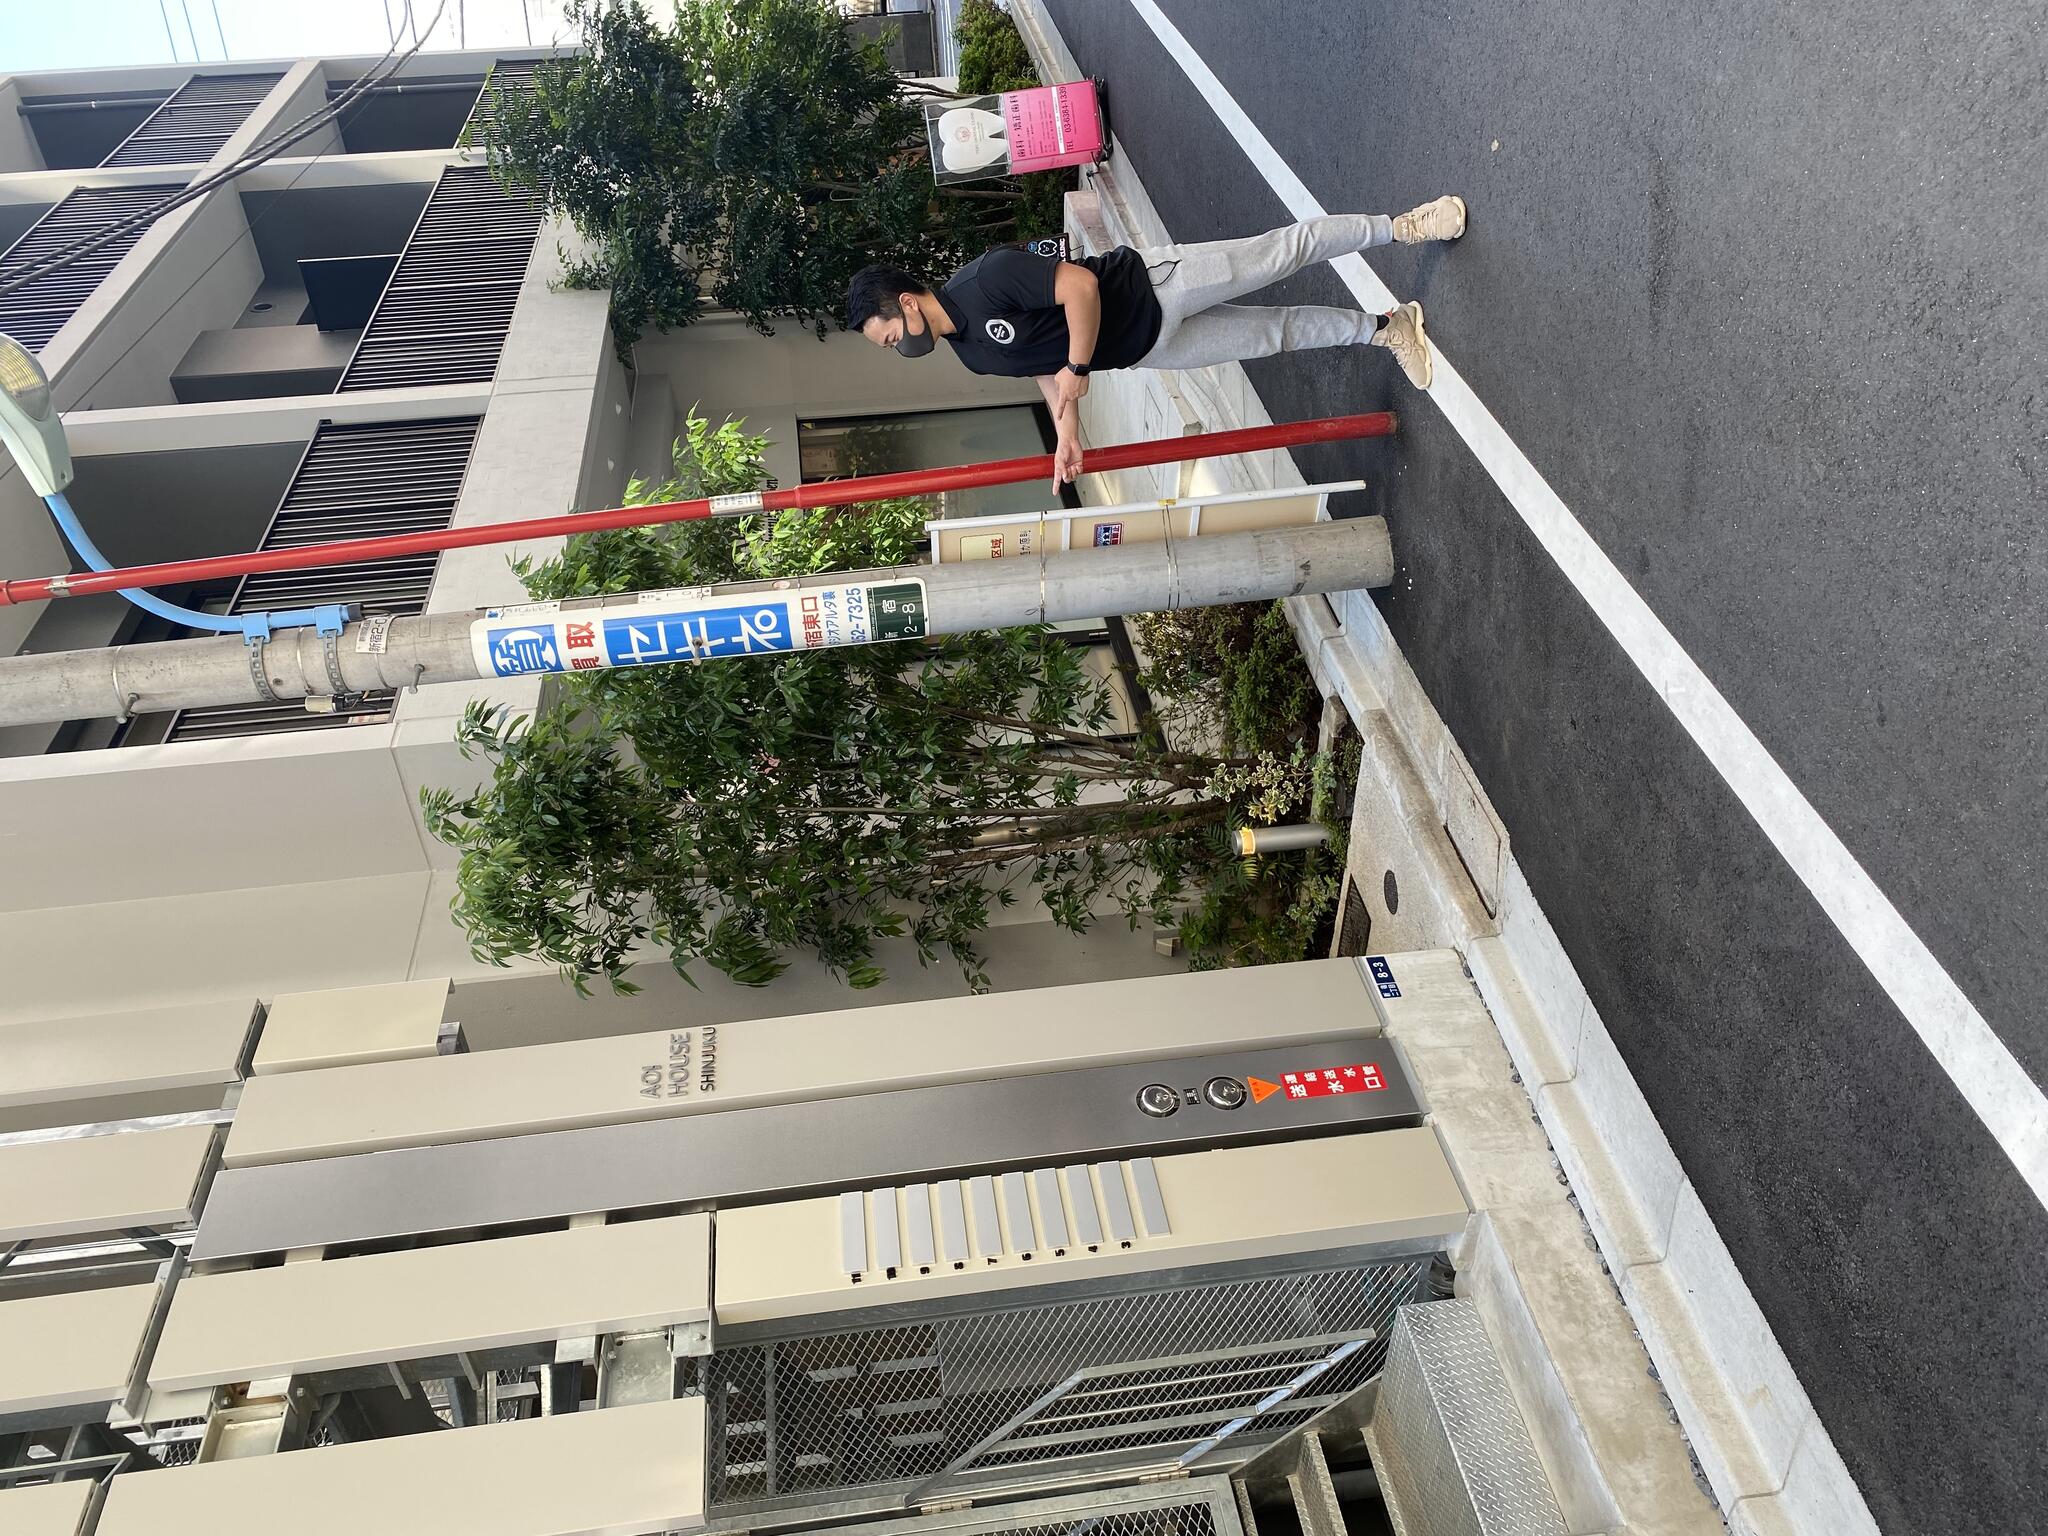 THE PERSONAL GYM 新宿御苑店からのお知らせ(入り口紹介)に関する写真